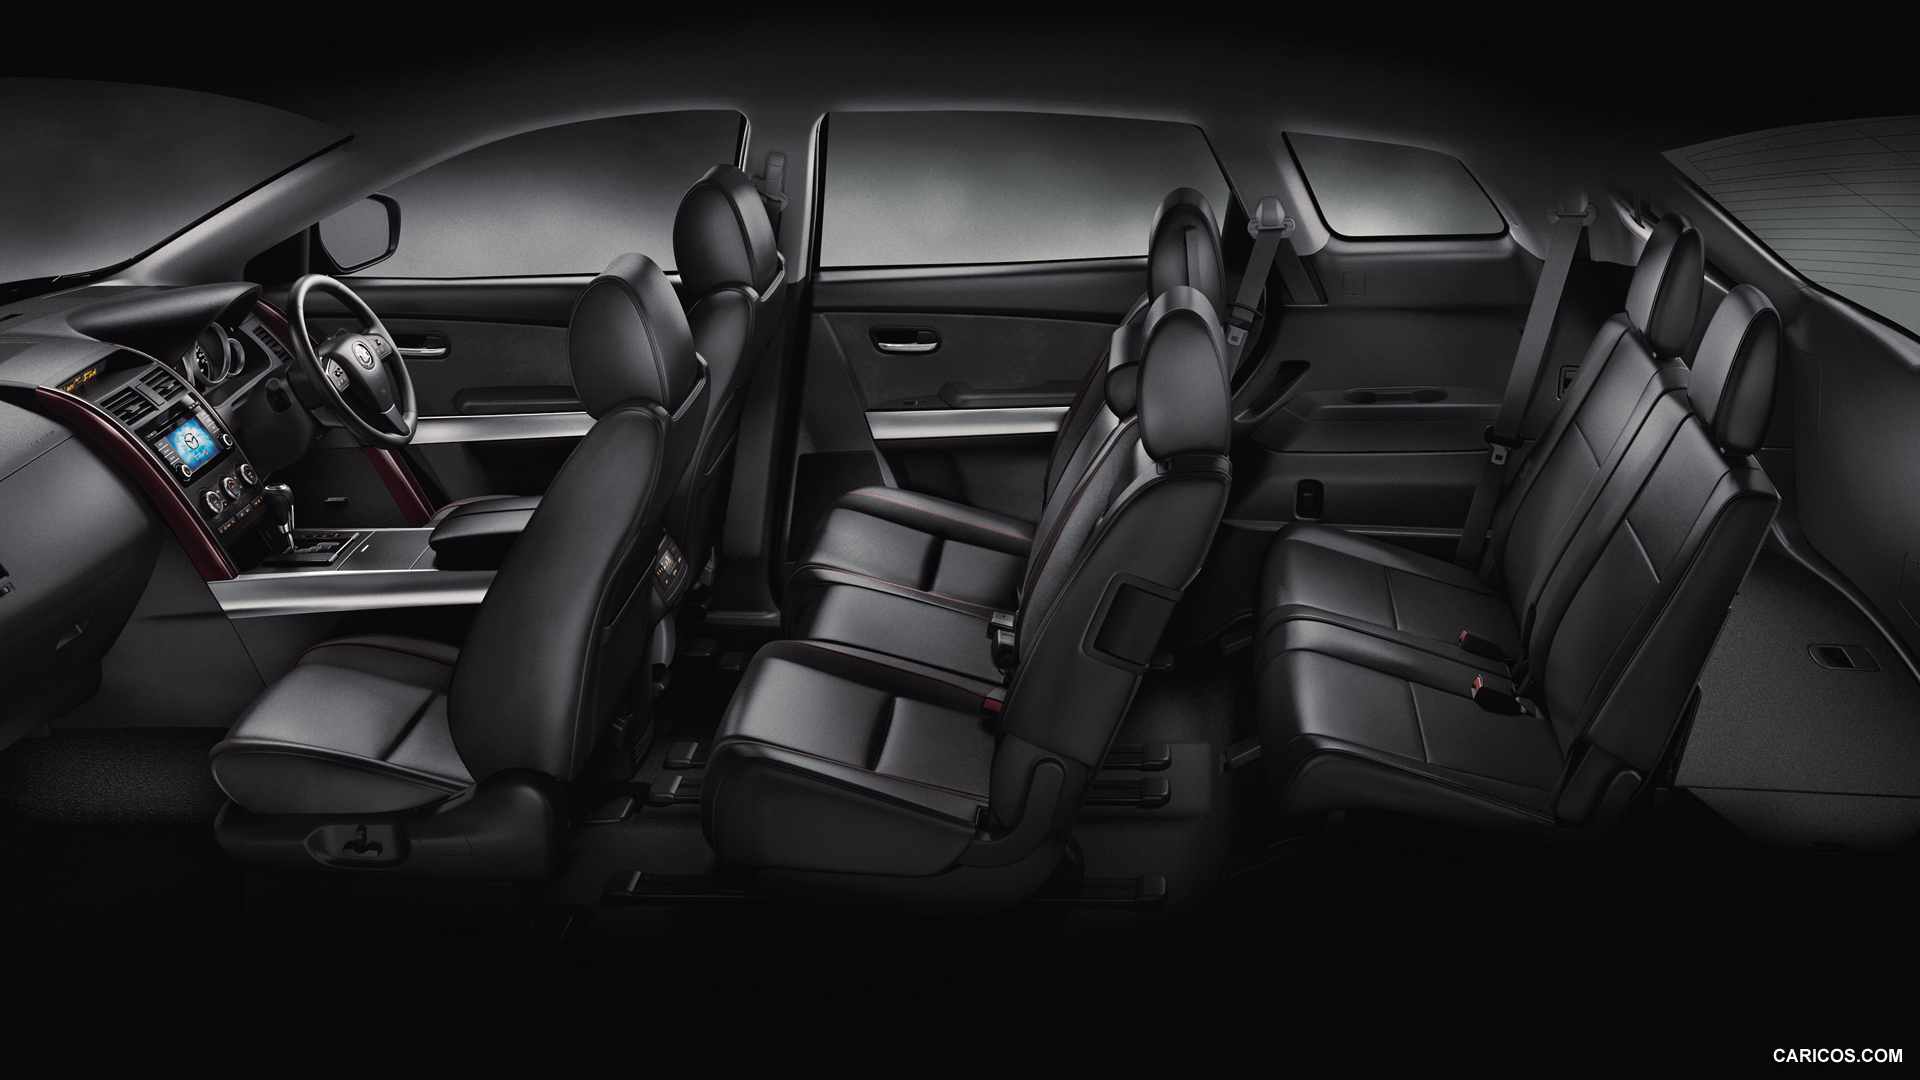 2013 Mazda CX-9 Three Row Seating - , #10 of 17